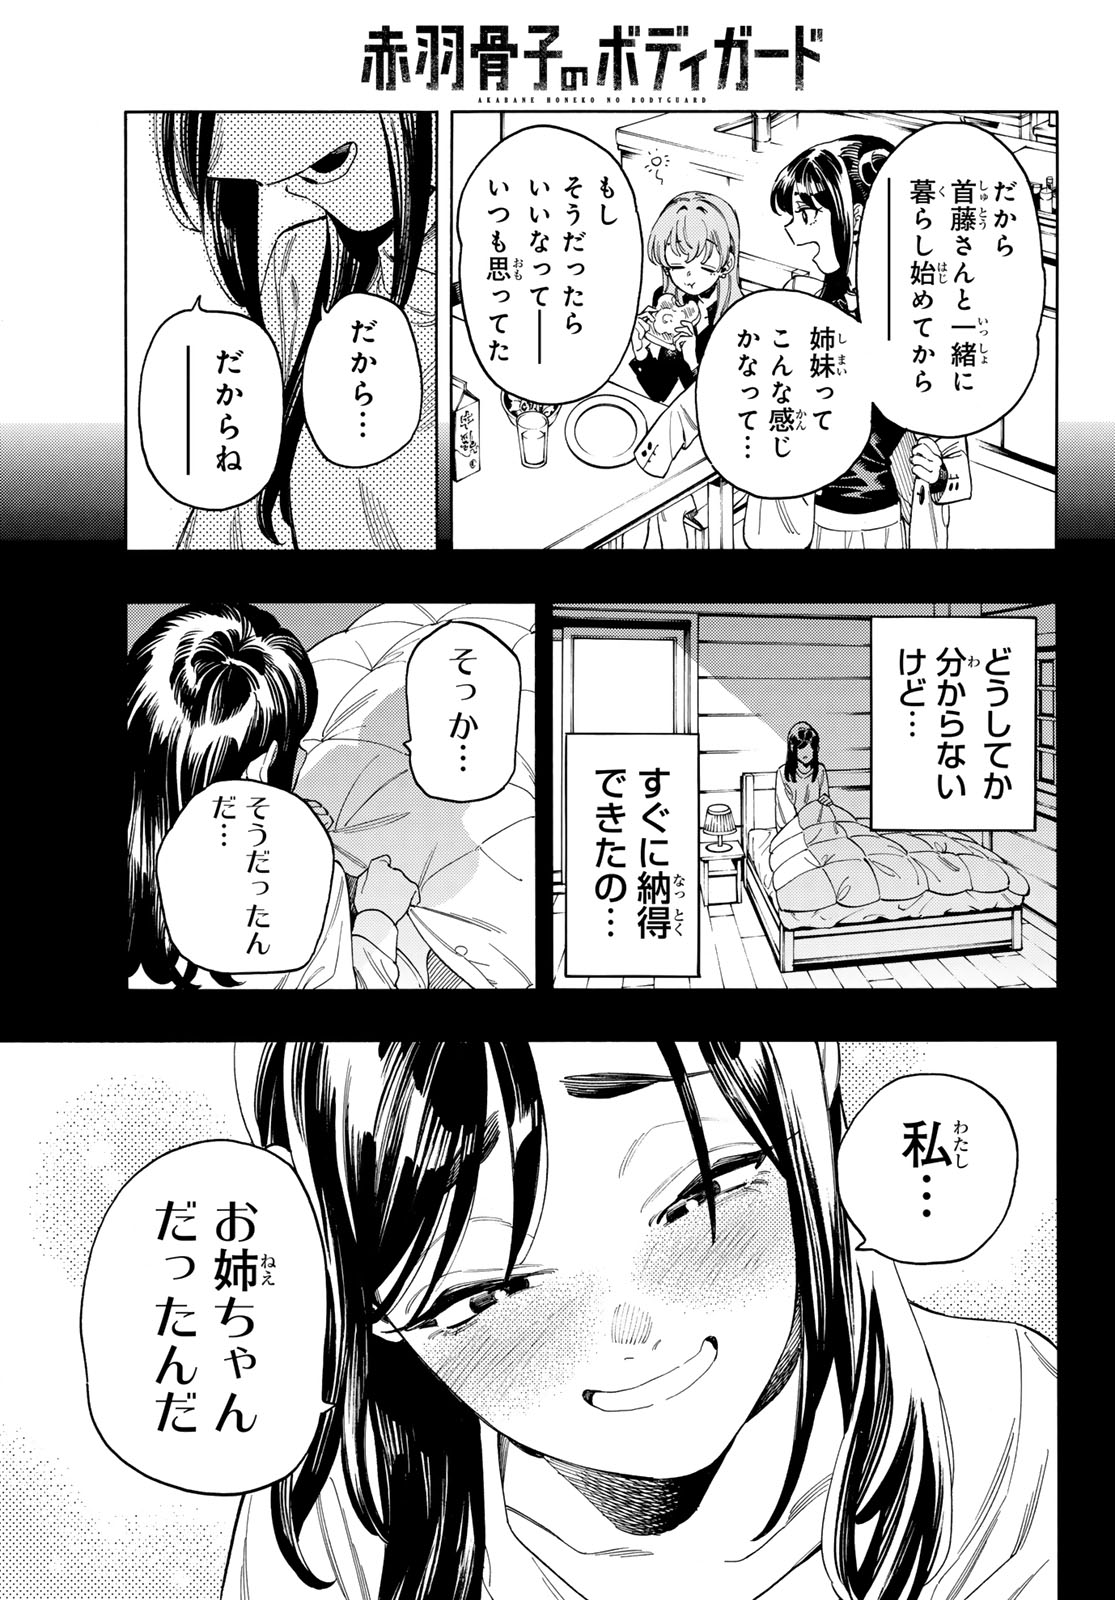 Akabane Honeko no Bodyguard - Chapter 88 - Page 13